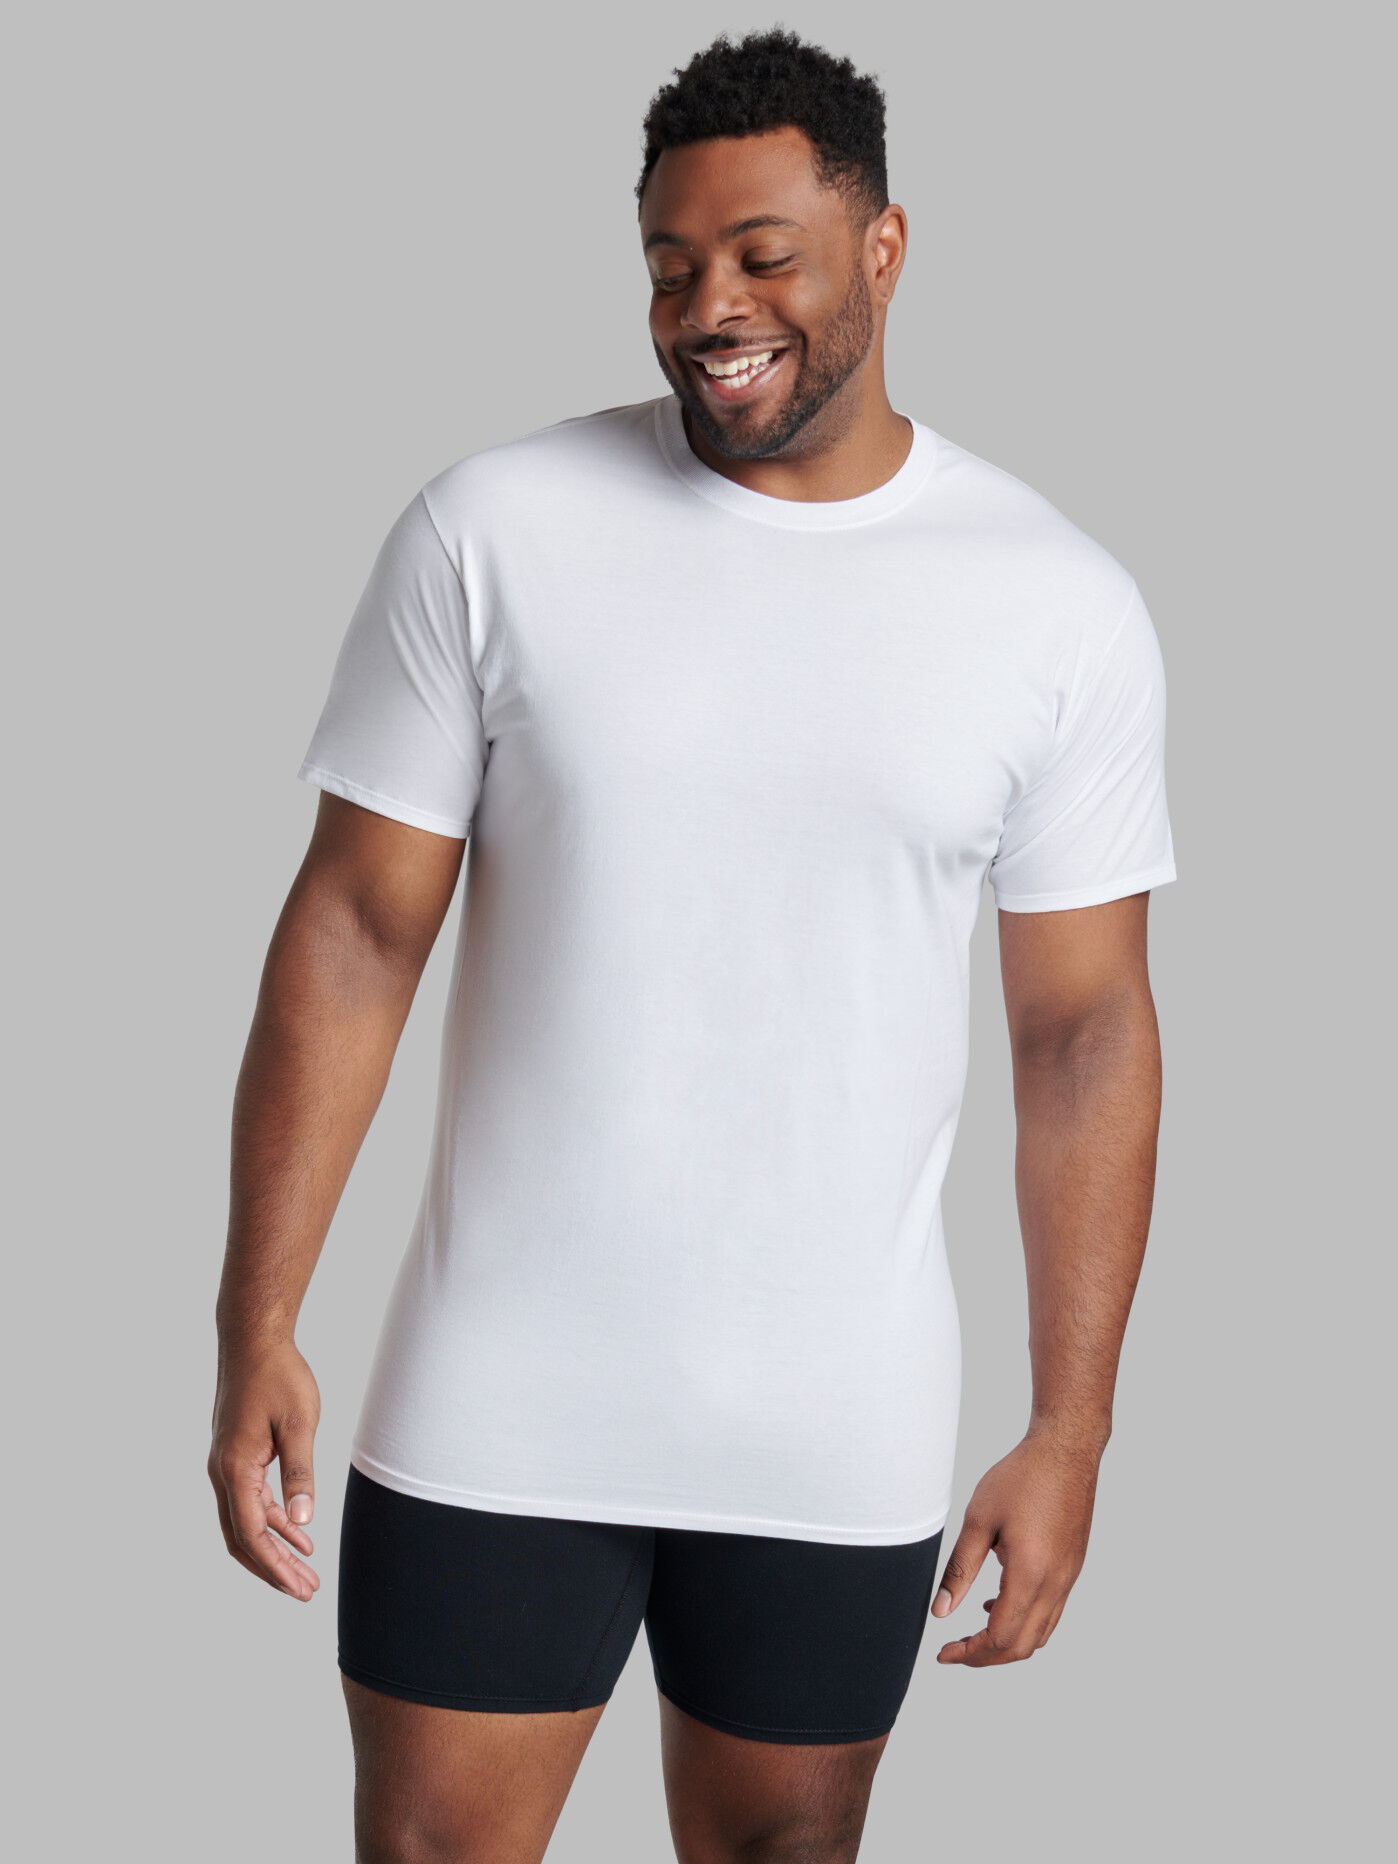 Tall Men's Short Sleeve White Crew T-Shirts, 3 Pack